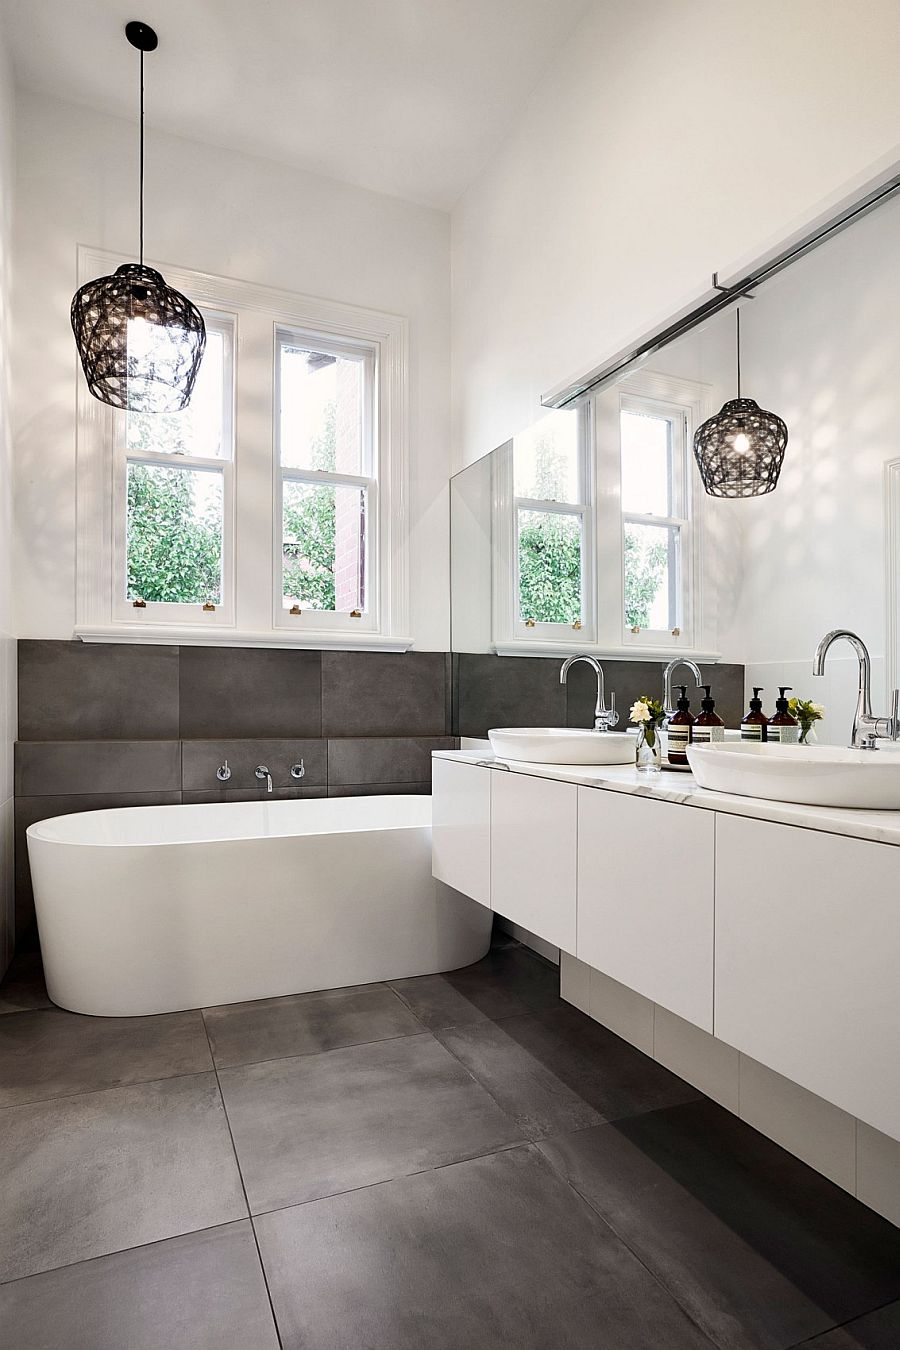 Fabulous bathroom design with pendant lighting and standalone bathtub